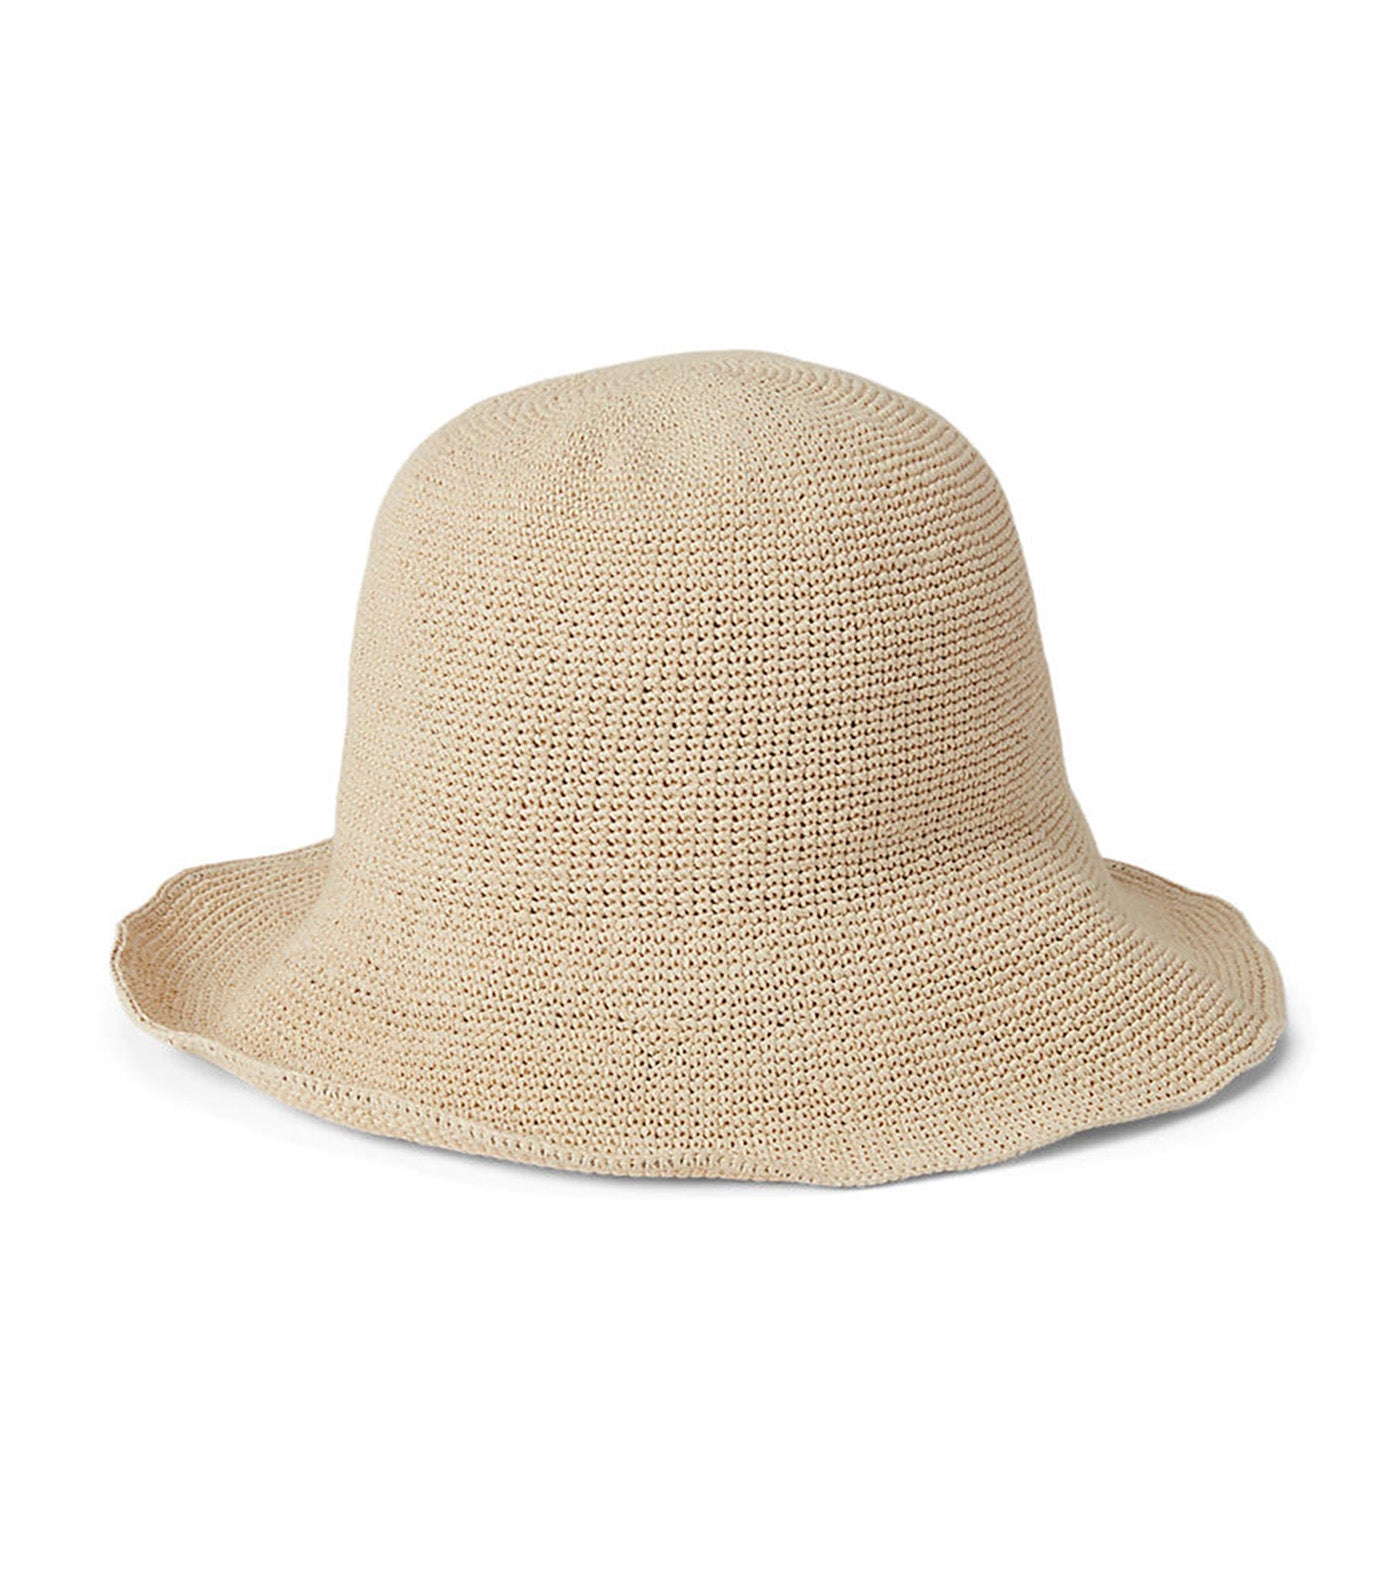 Women's Crochet Gardener Straw Hat Natural